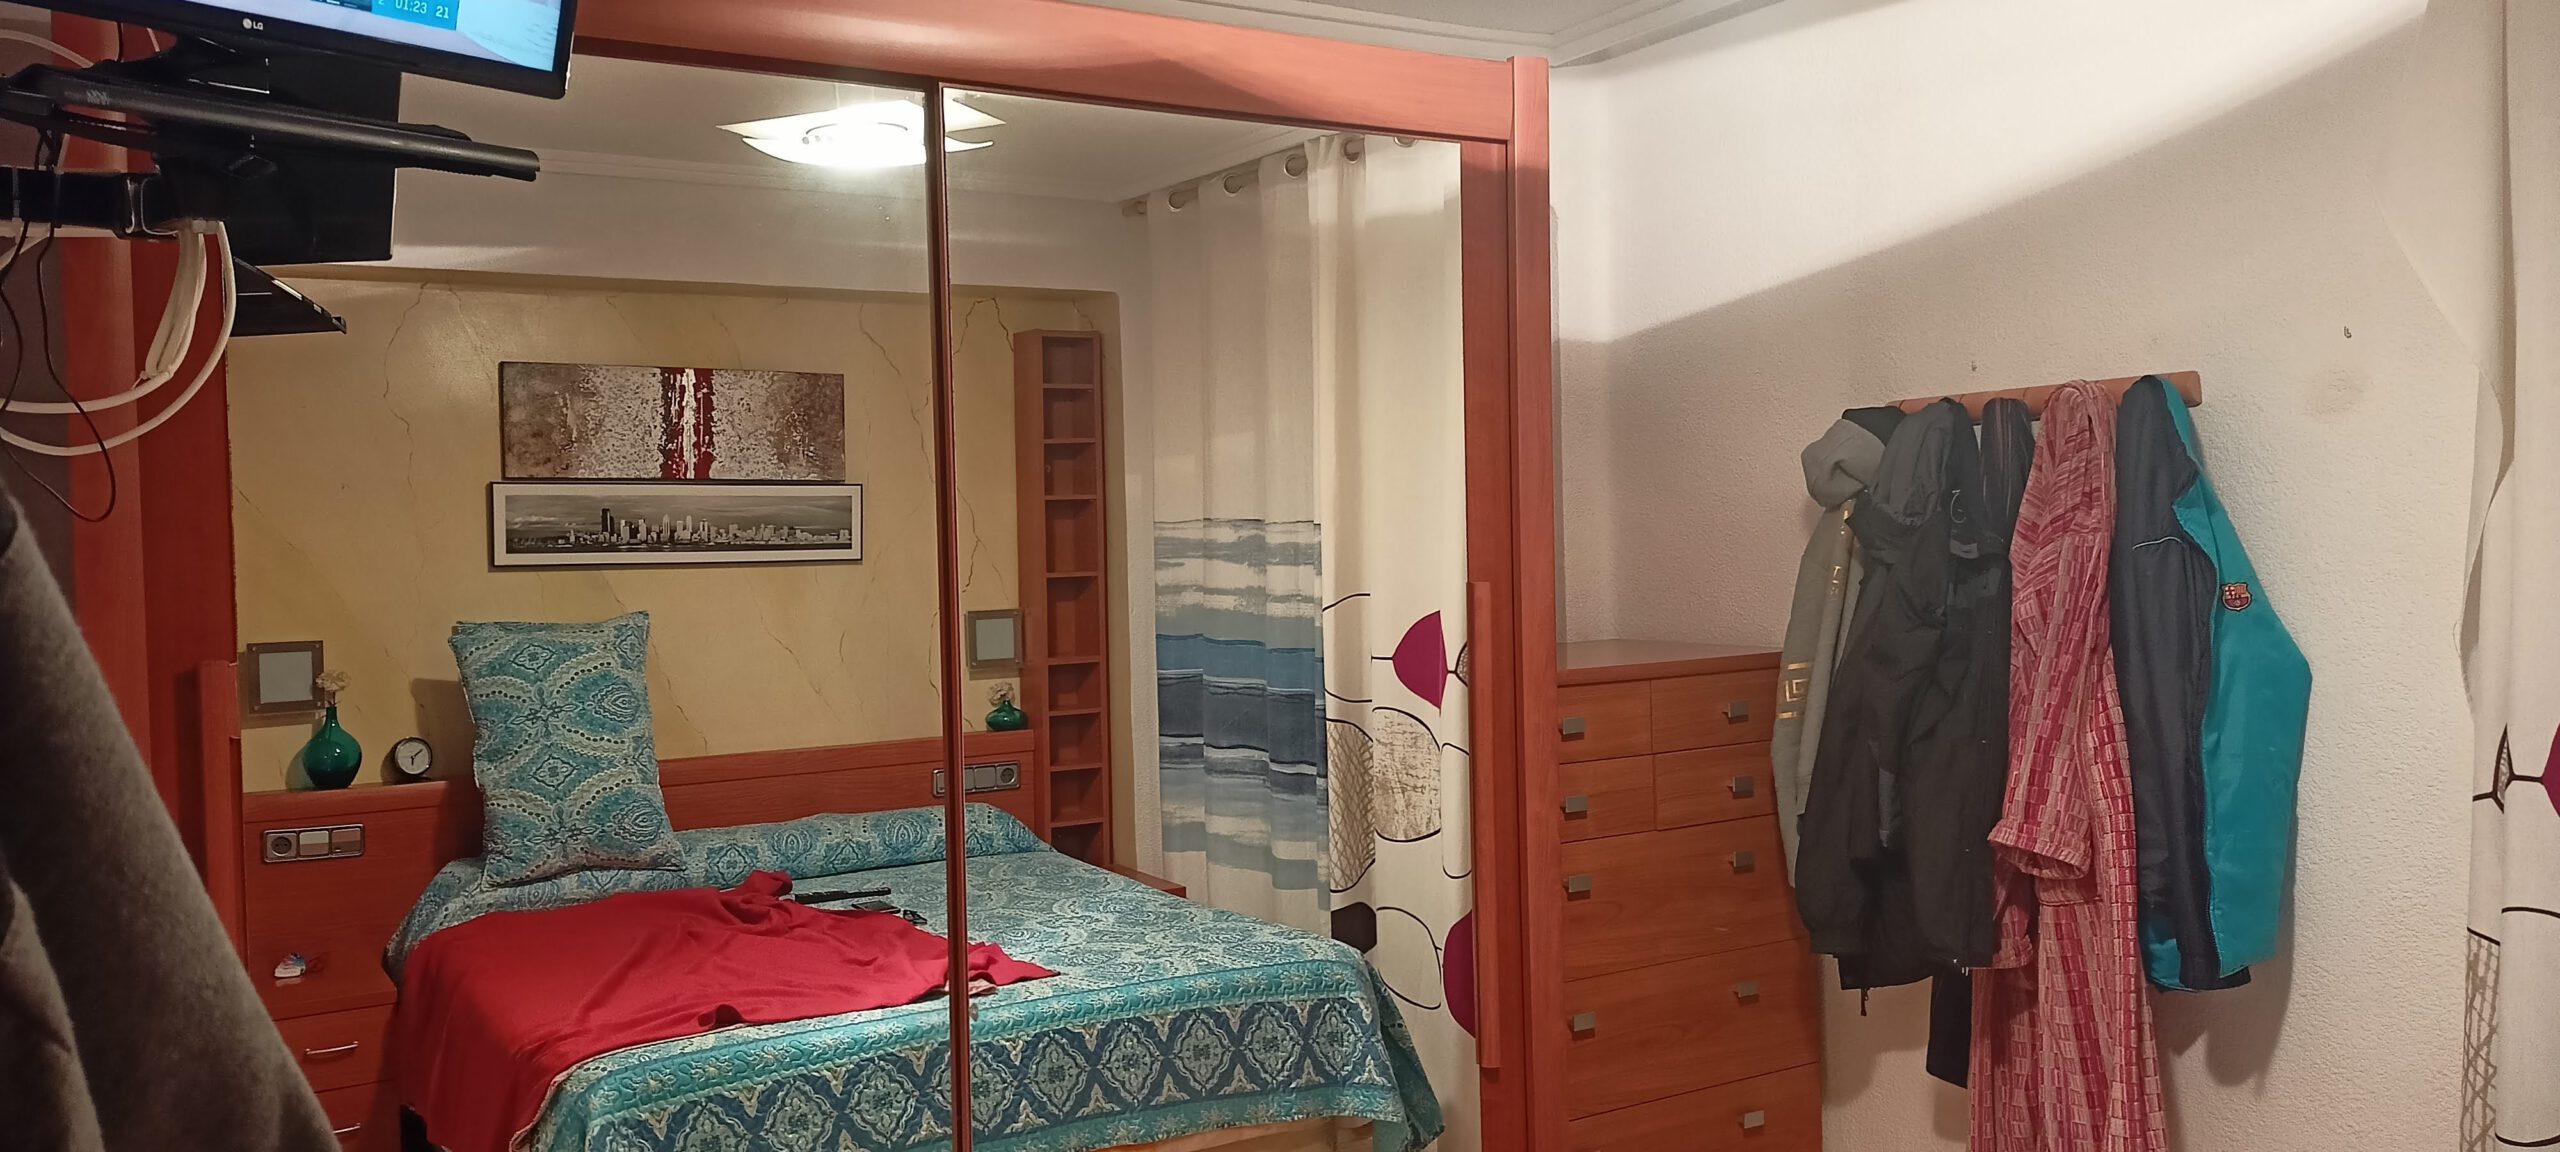 Dormitorio sin Home Staging